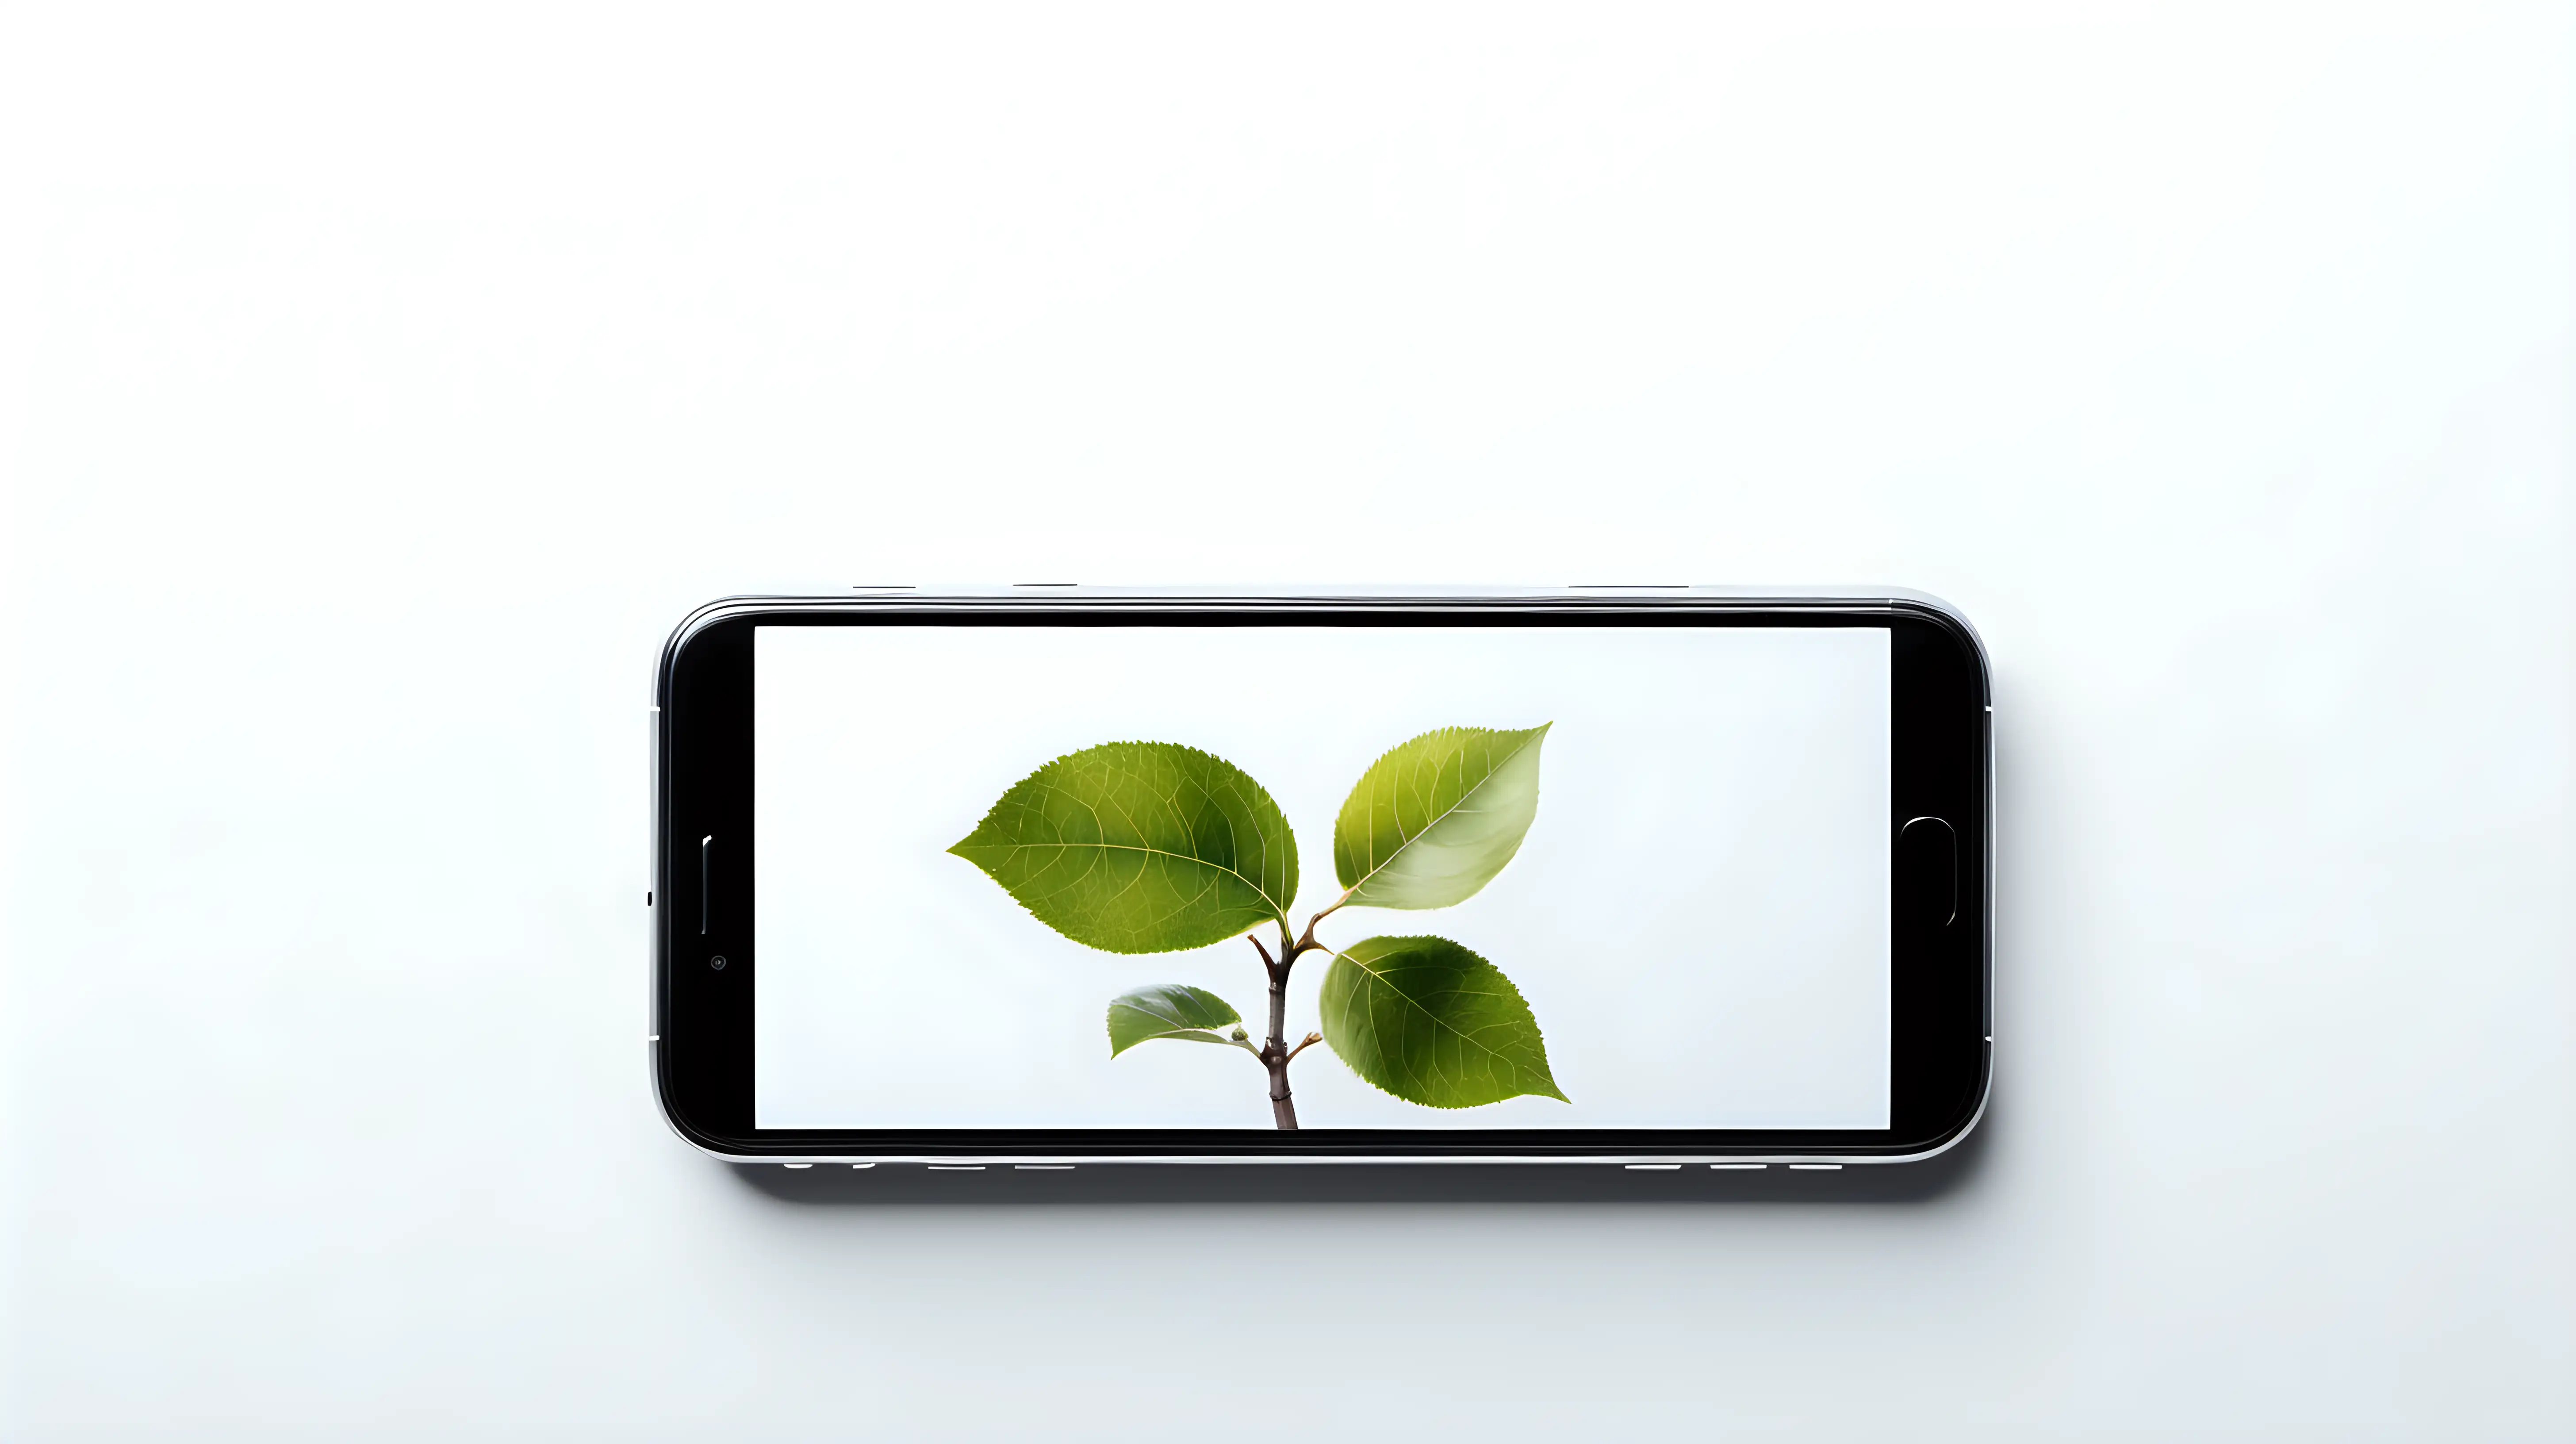 Artistic Minimalistic Nature Wallpaper on Apple Mobile Phone